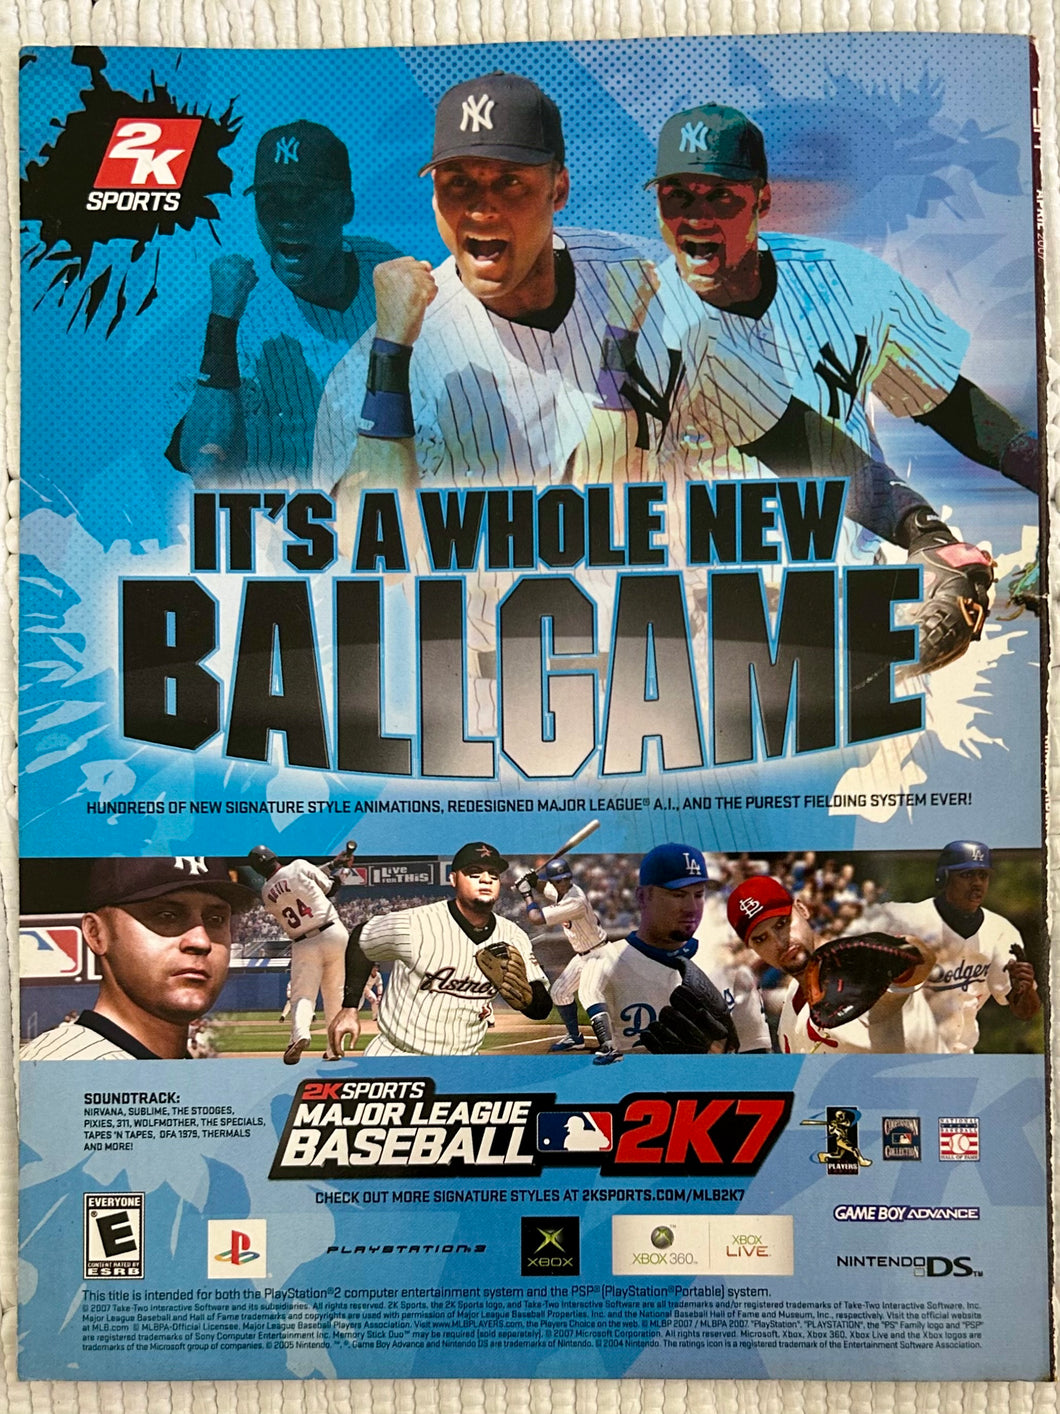 Major League Baseball 2K7 - PS2 PS3 GBA Xbox 350 NDS PSP - Original Vintage Advertisement - Print Ads - Laminated A4 Poster